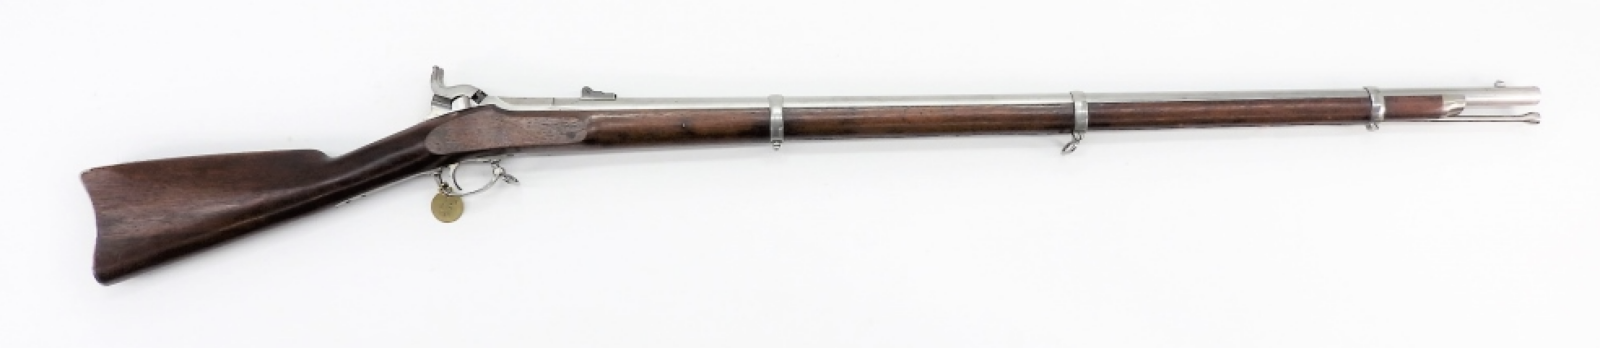 Circa-1863 U.S. Model 1863 Lindsay double rifle musket, estimated at $2,000-$4,000